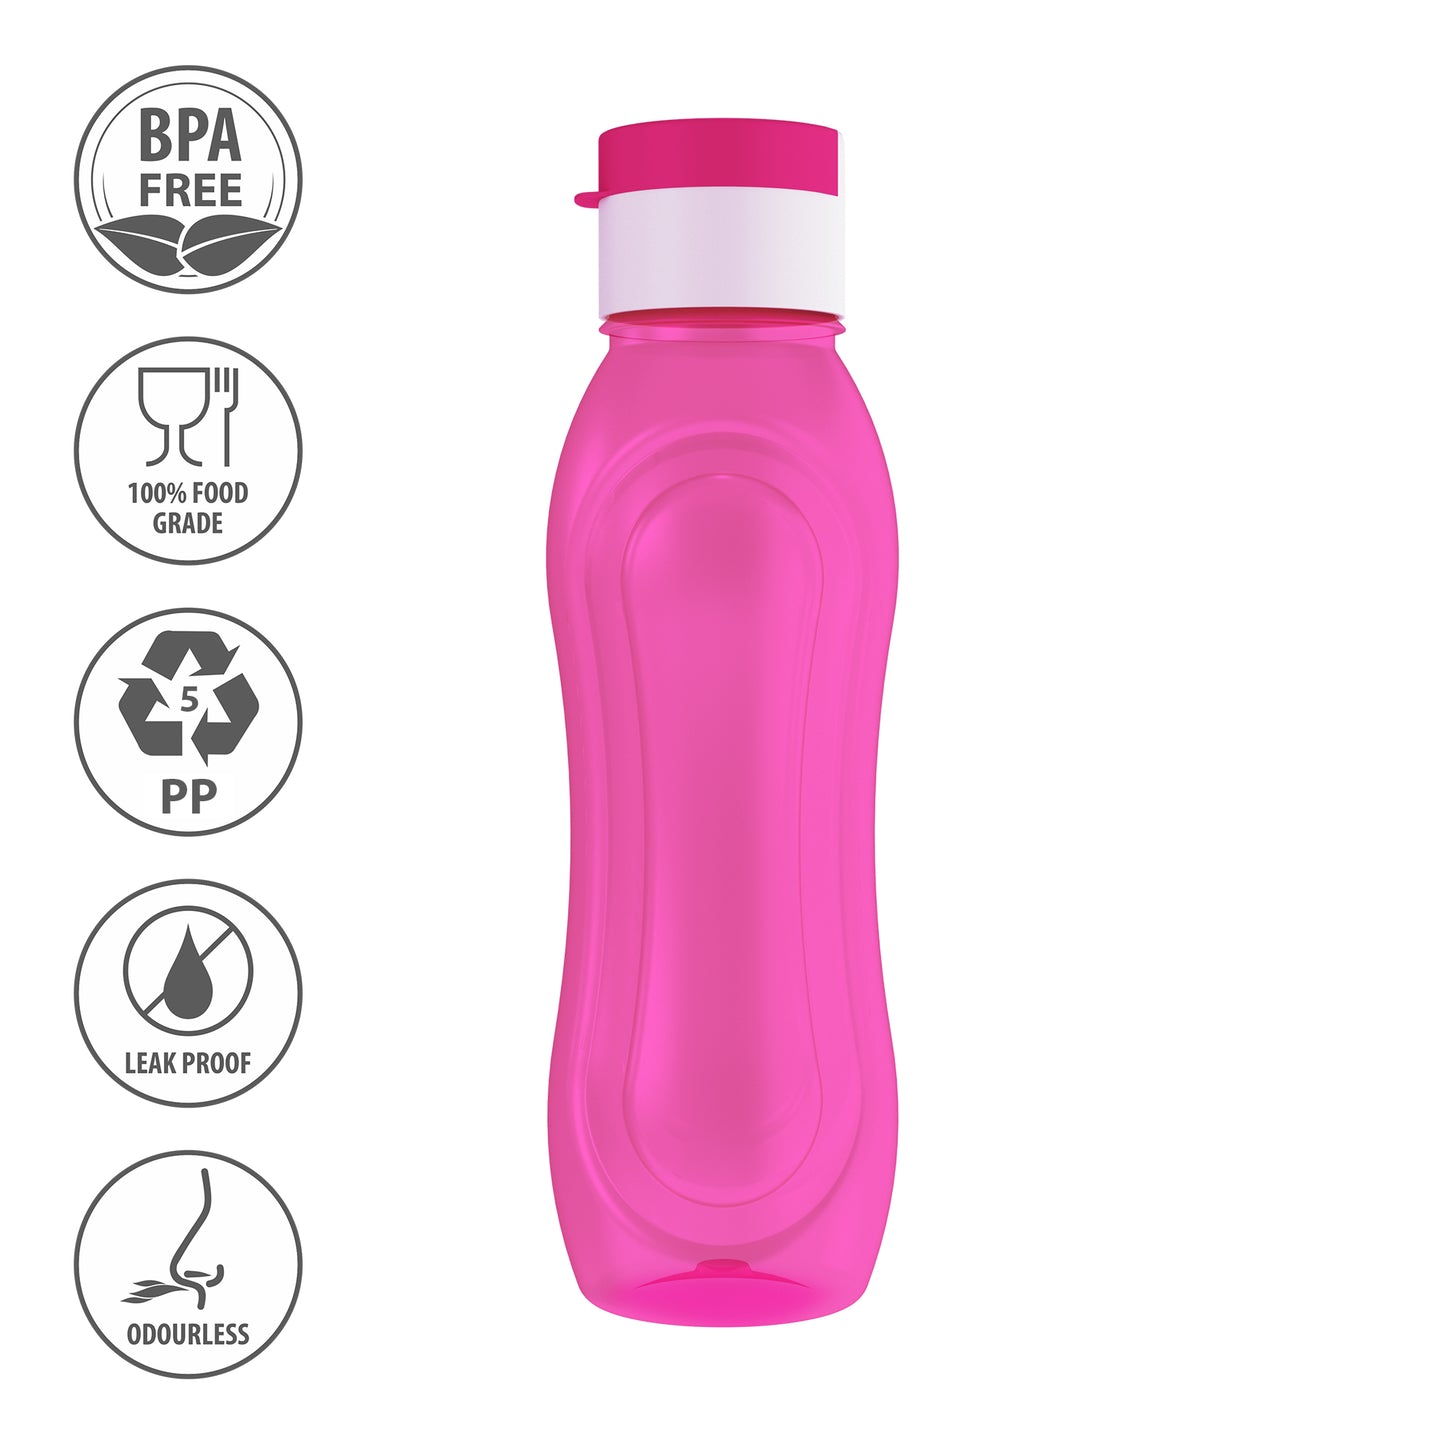 GPET Polypropylene Water Bottle Set with Flip Cap 500ML (Set Of 6, Pansy-Multicolor)